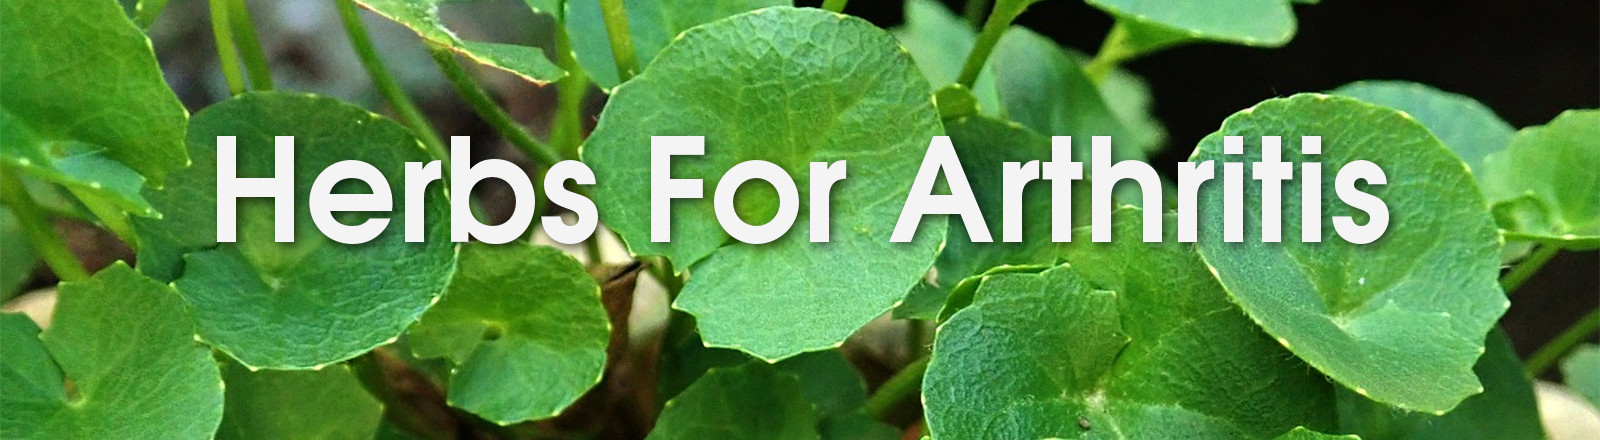 Herbs for Arthritis